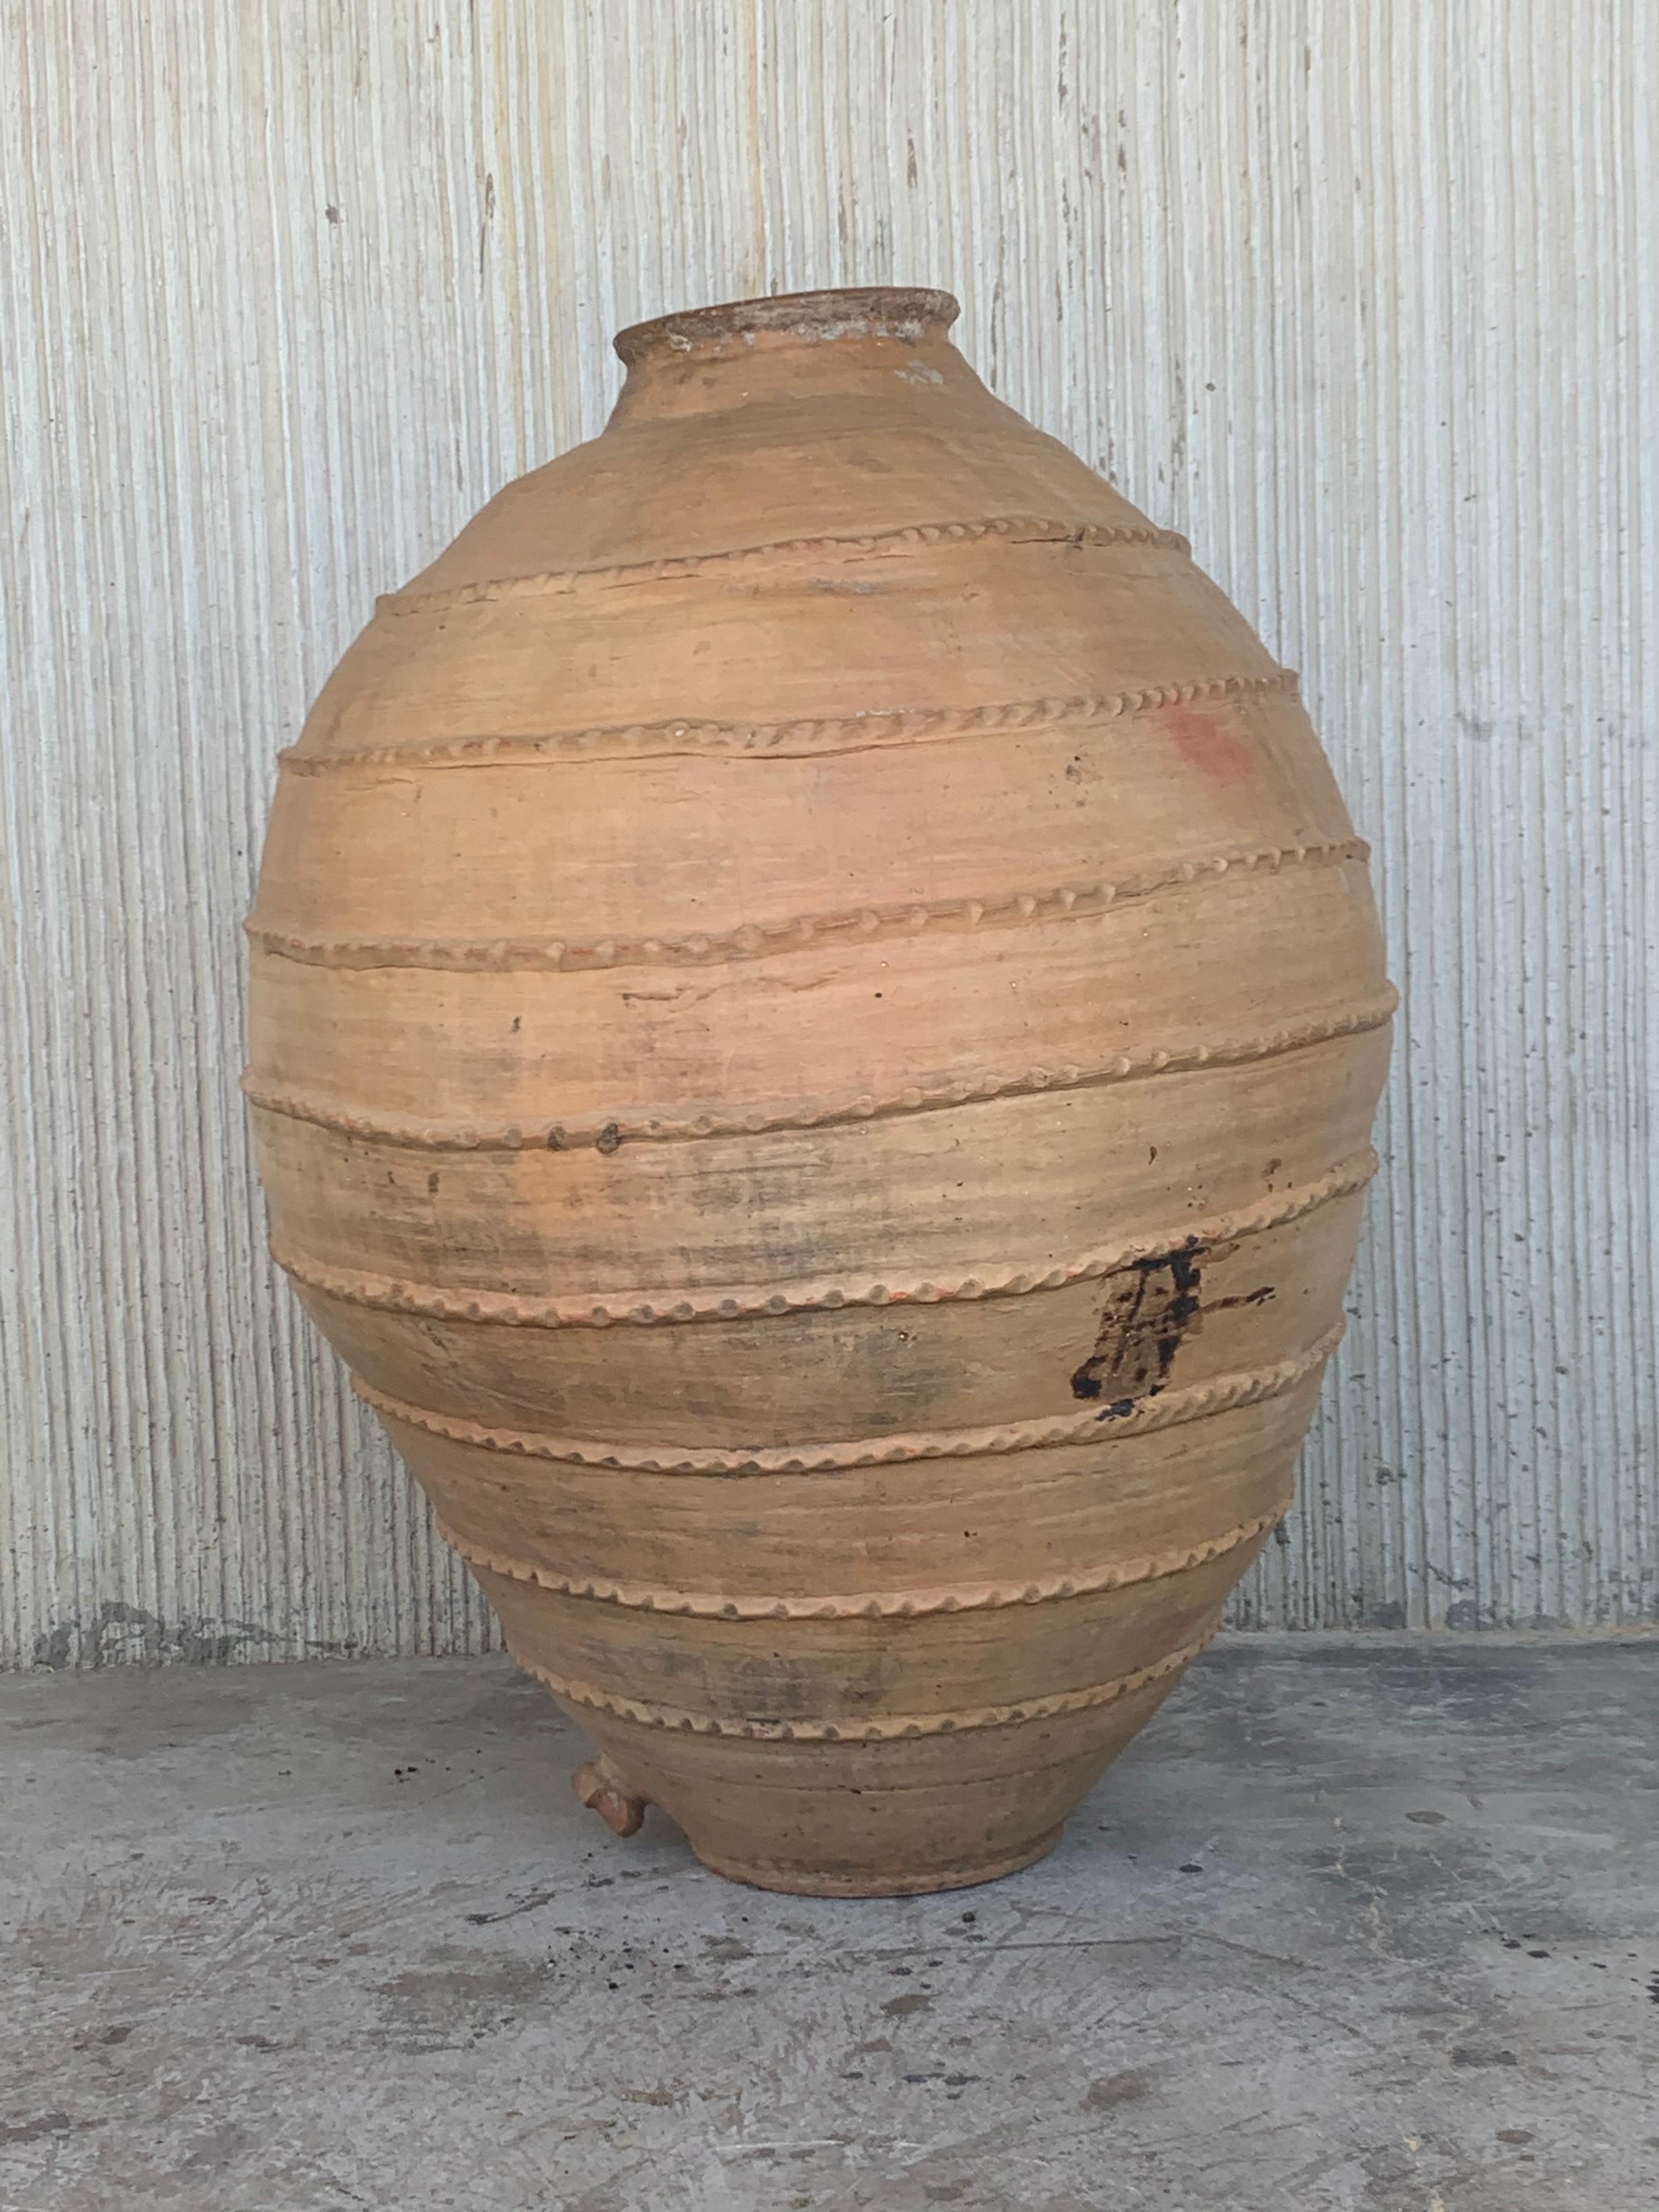 Old tinaja of Calanda (Teruel), Spain.
Made of clay with handcrafted semi circular handmade ribbed around the vase
This 